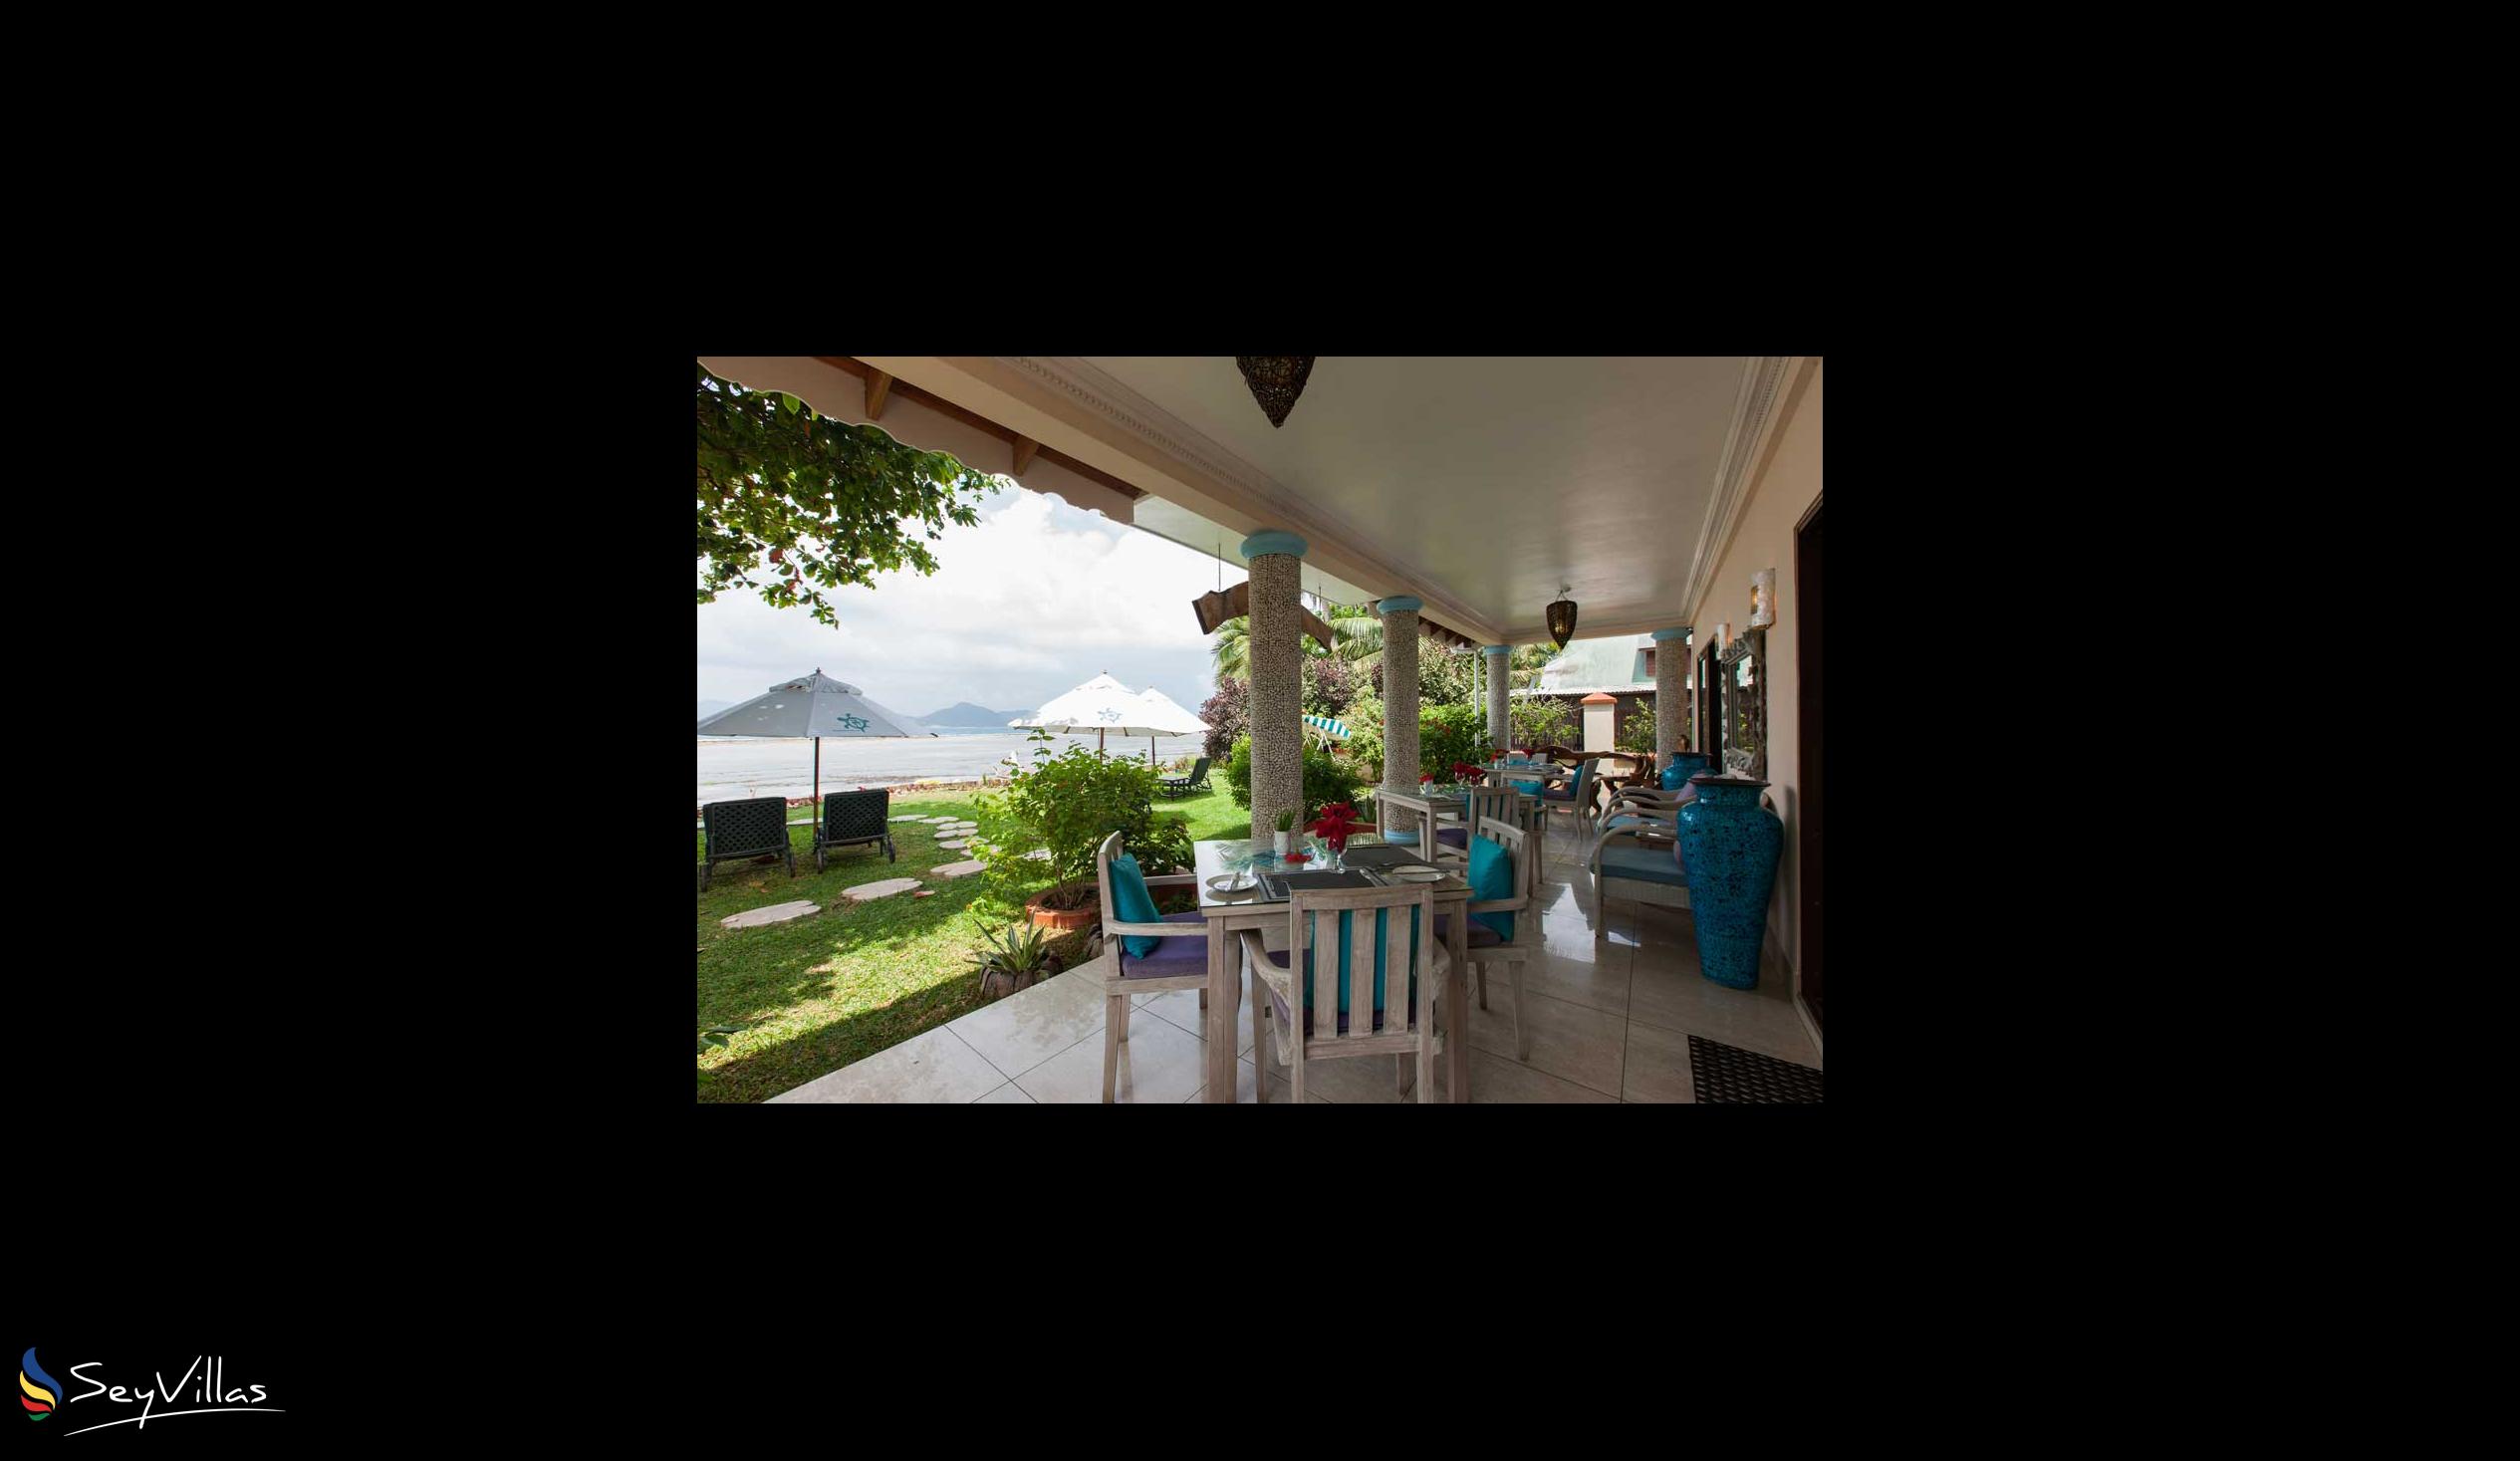 Photo 6: Le Relax Beach House - Indoor area - La Digue (Seychelles)